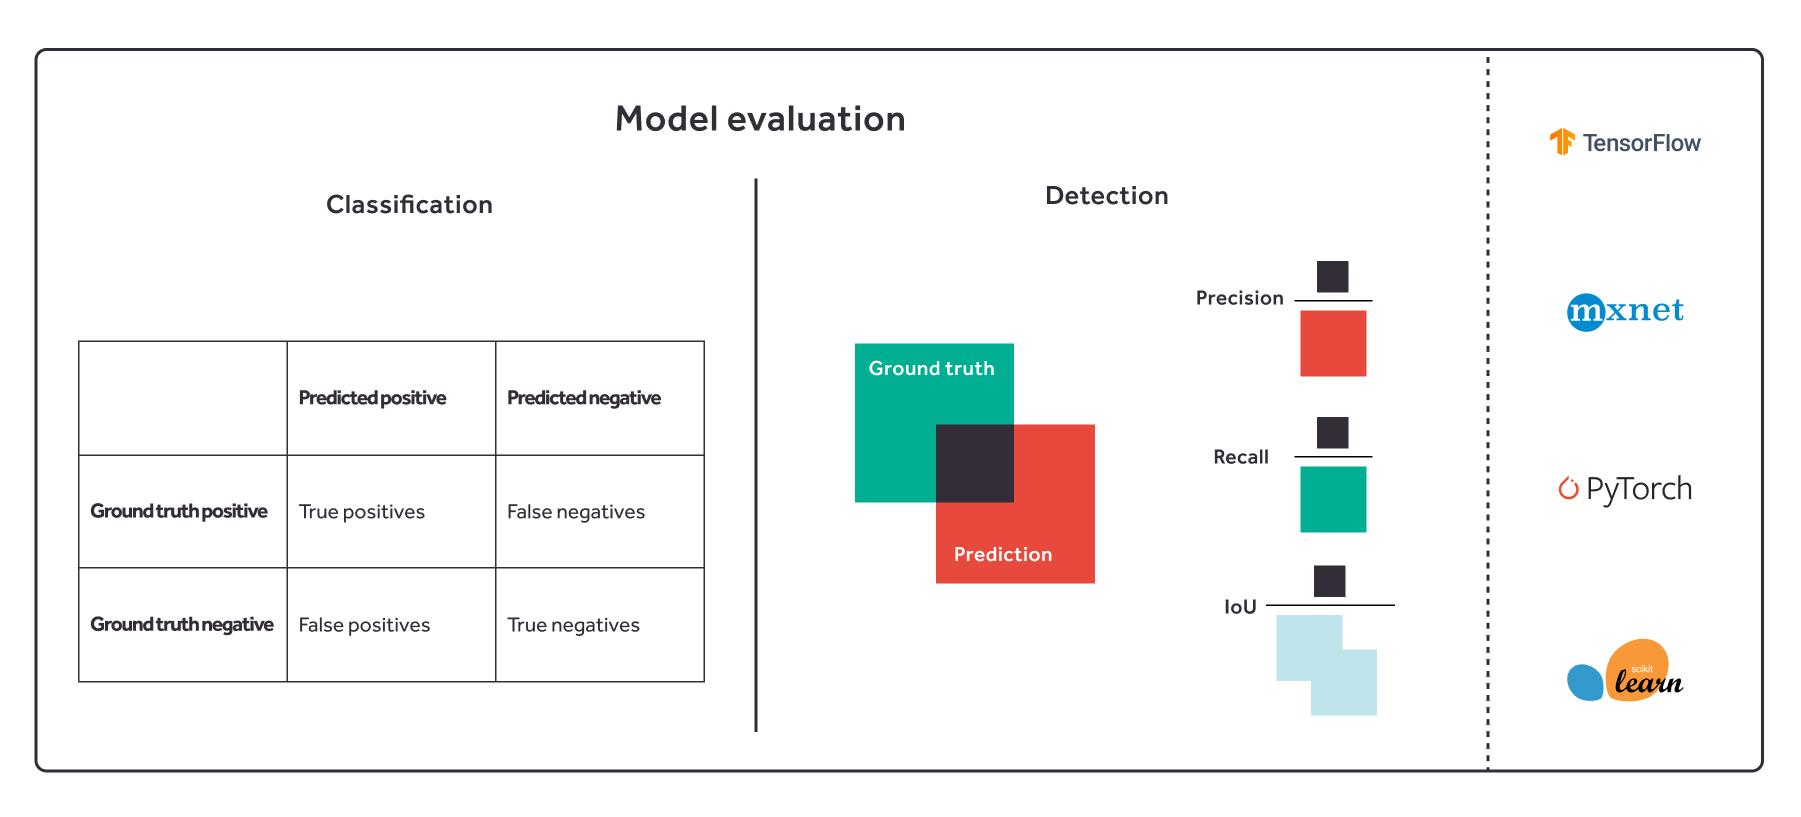 Model evaluation